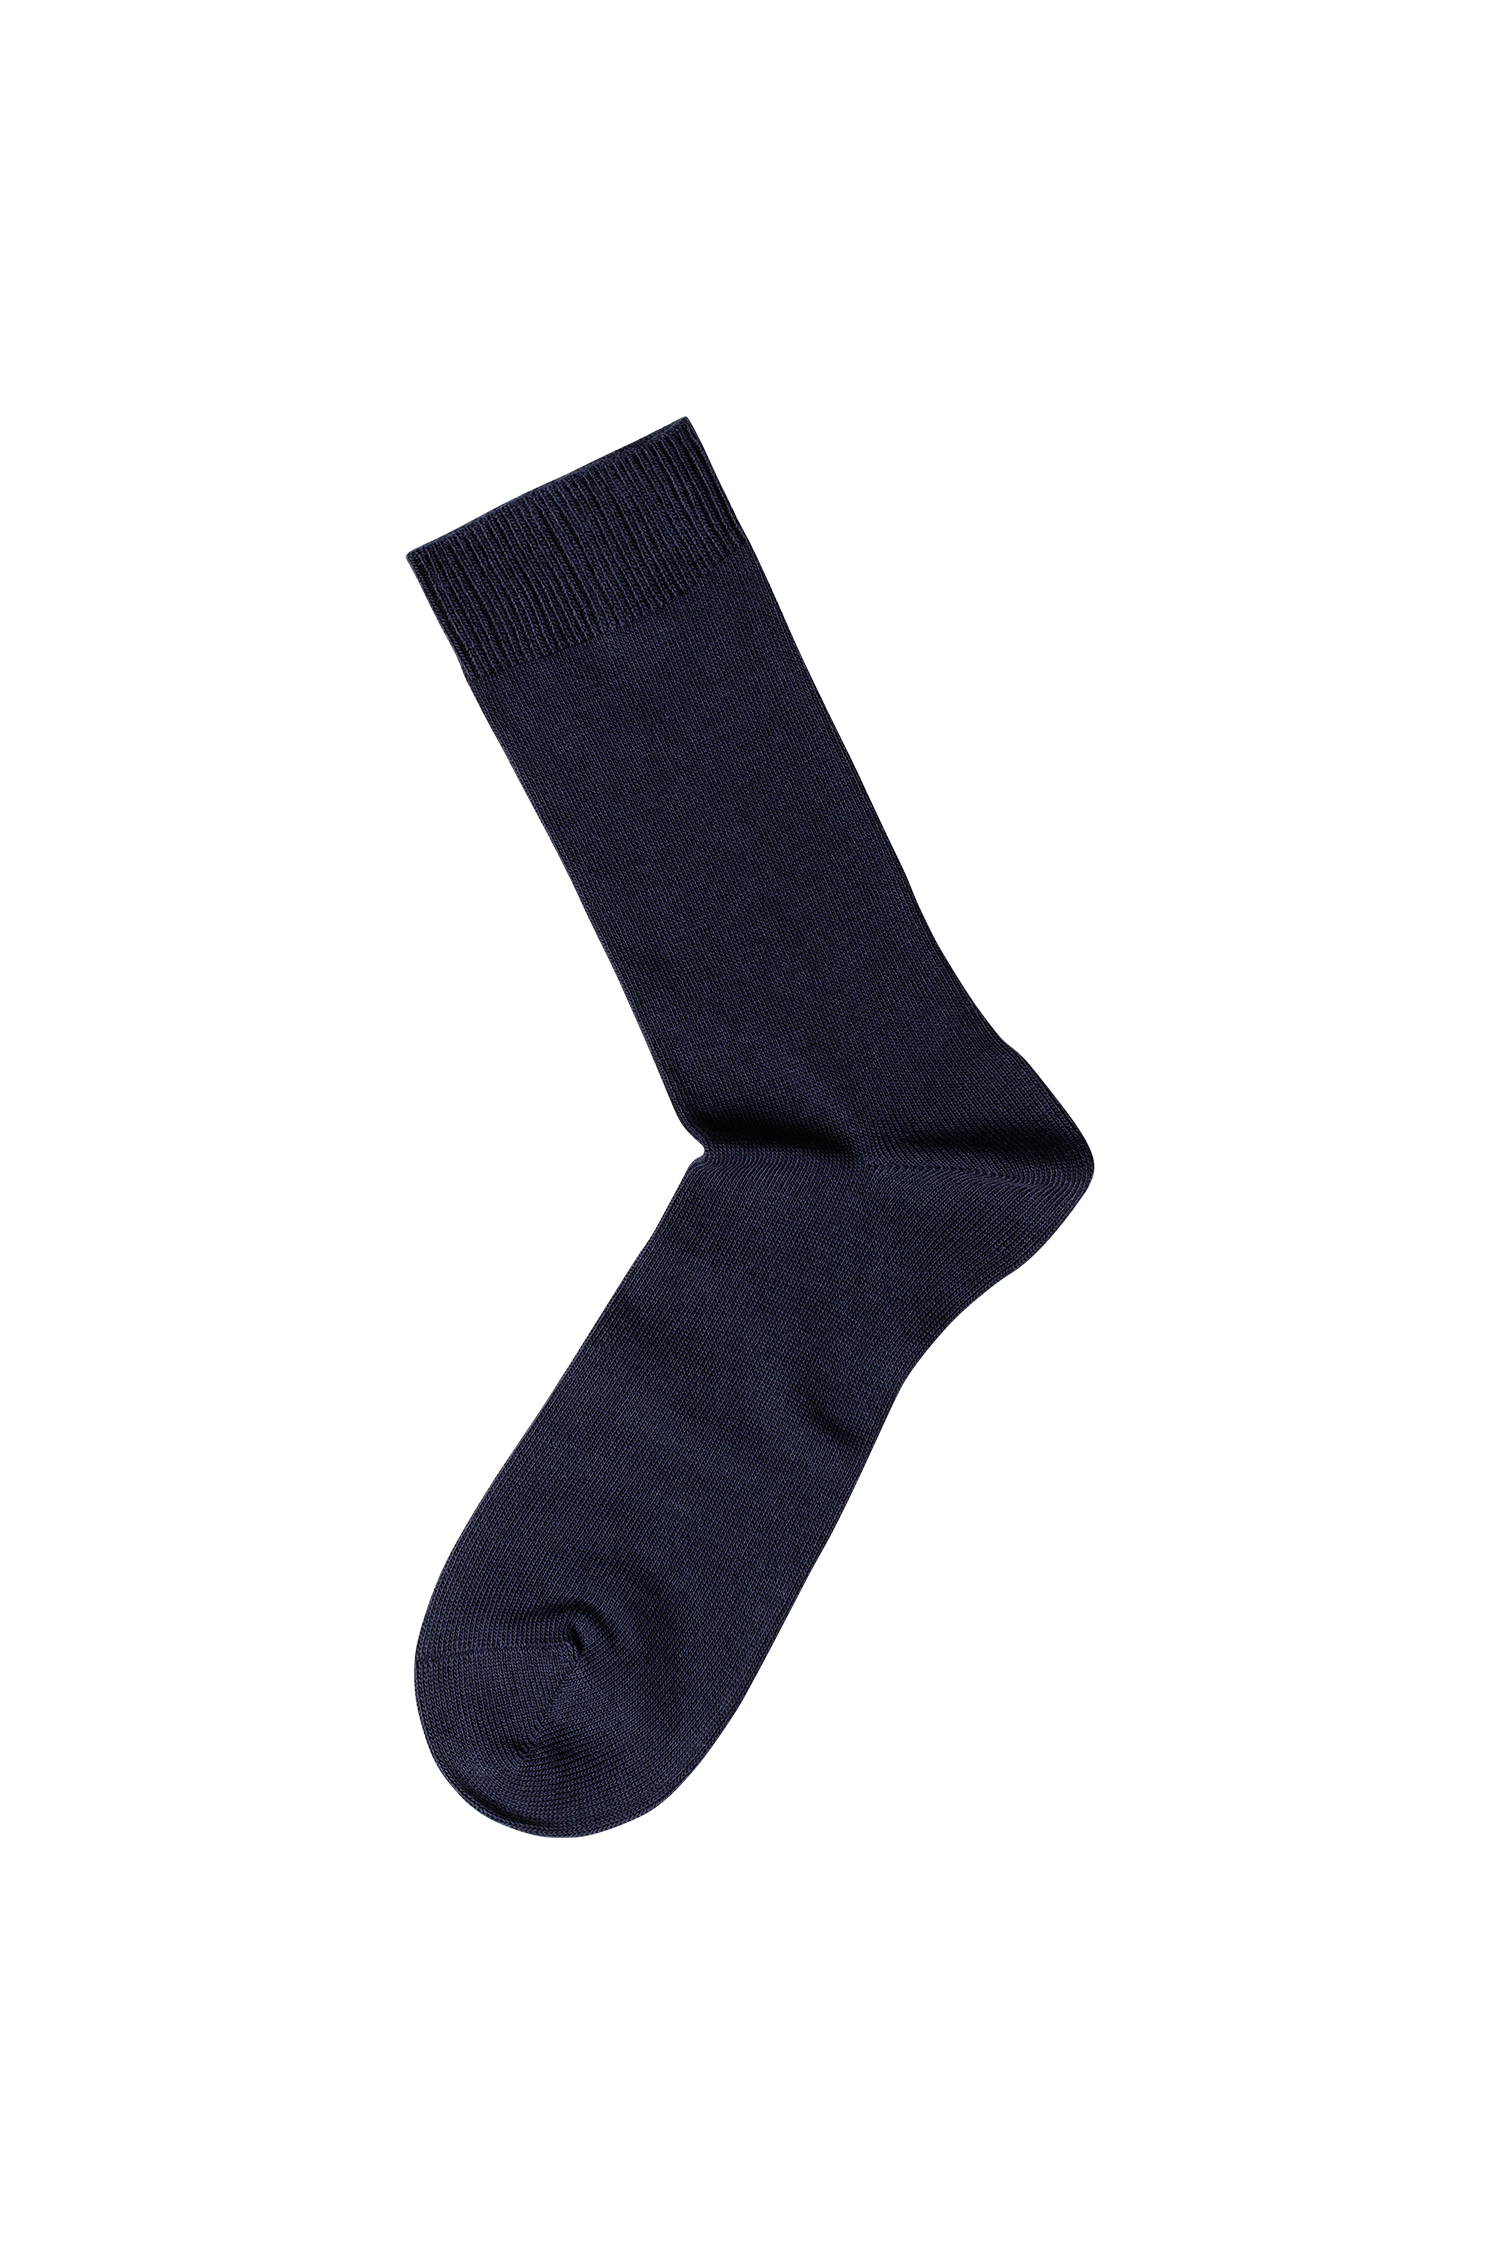 Organic Plain Cotton Socks navy 35/38